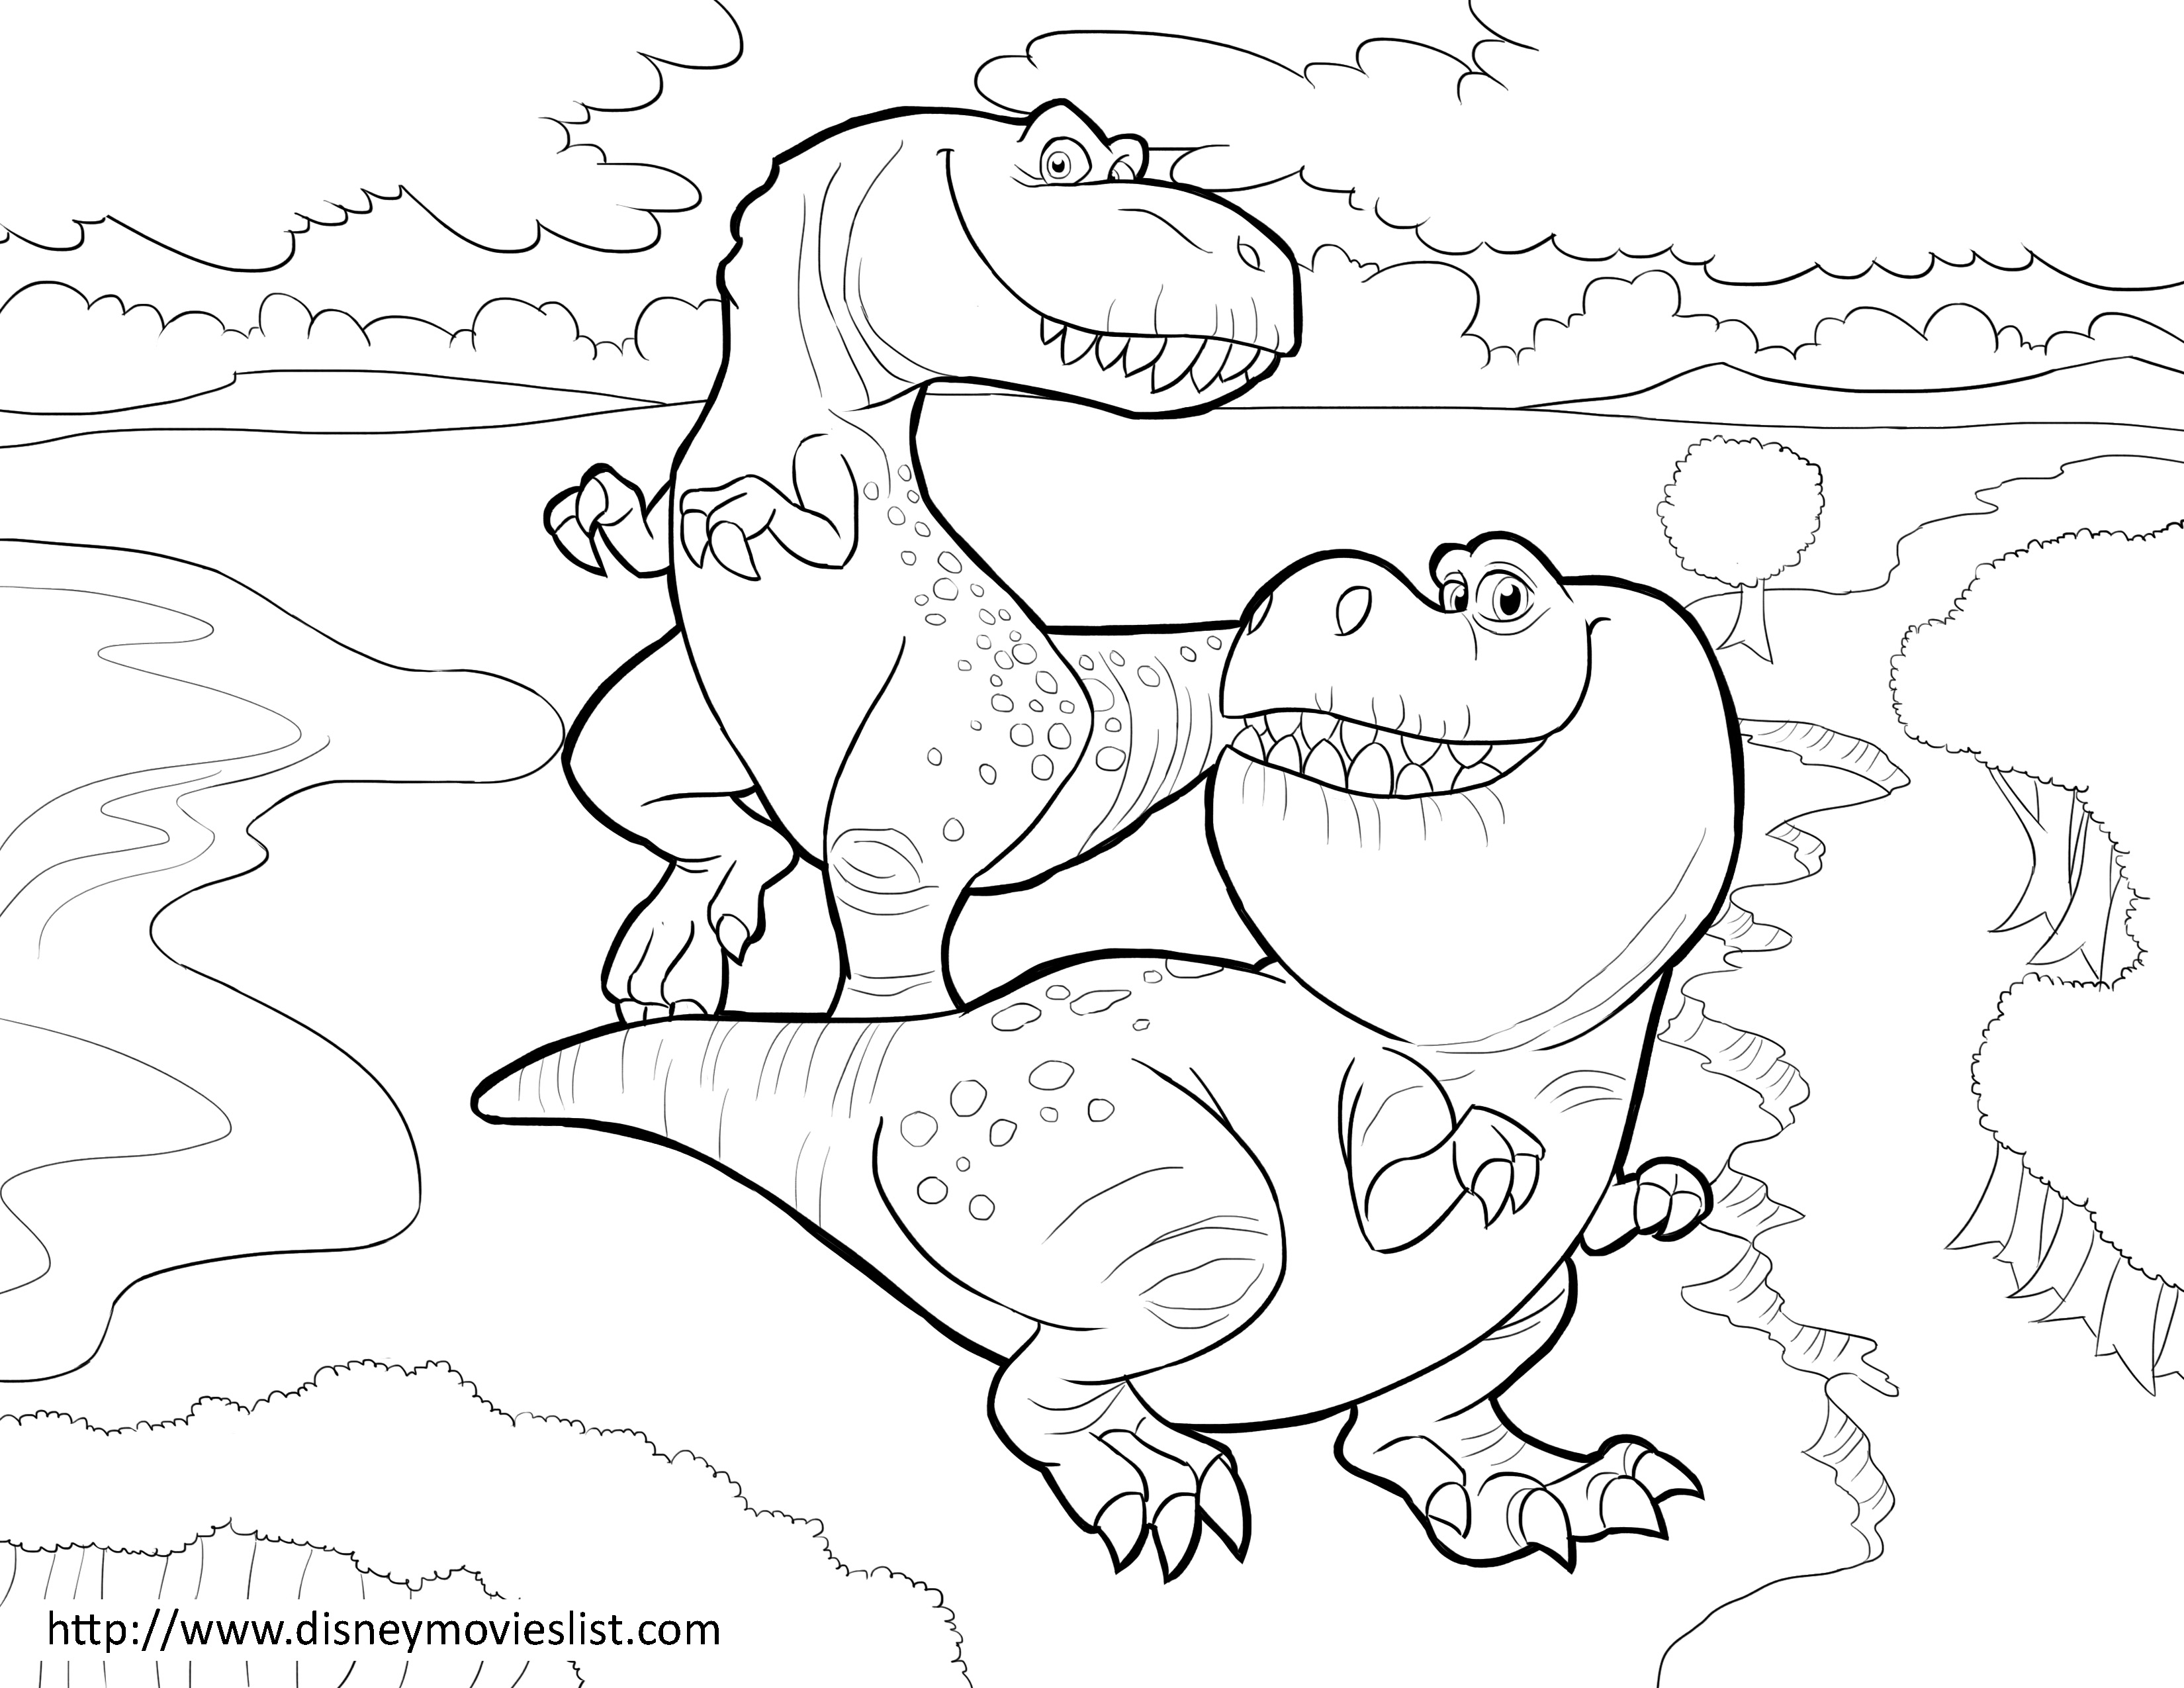 Carnotaurus Coloring Page at GetColorings.com | Free printable